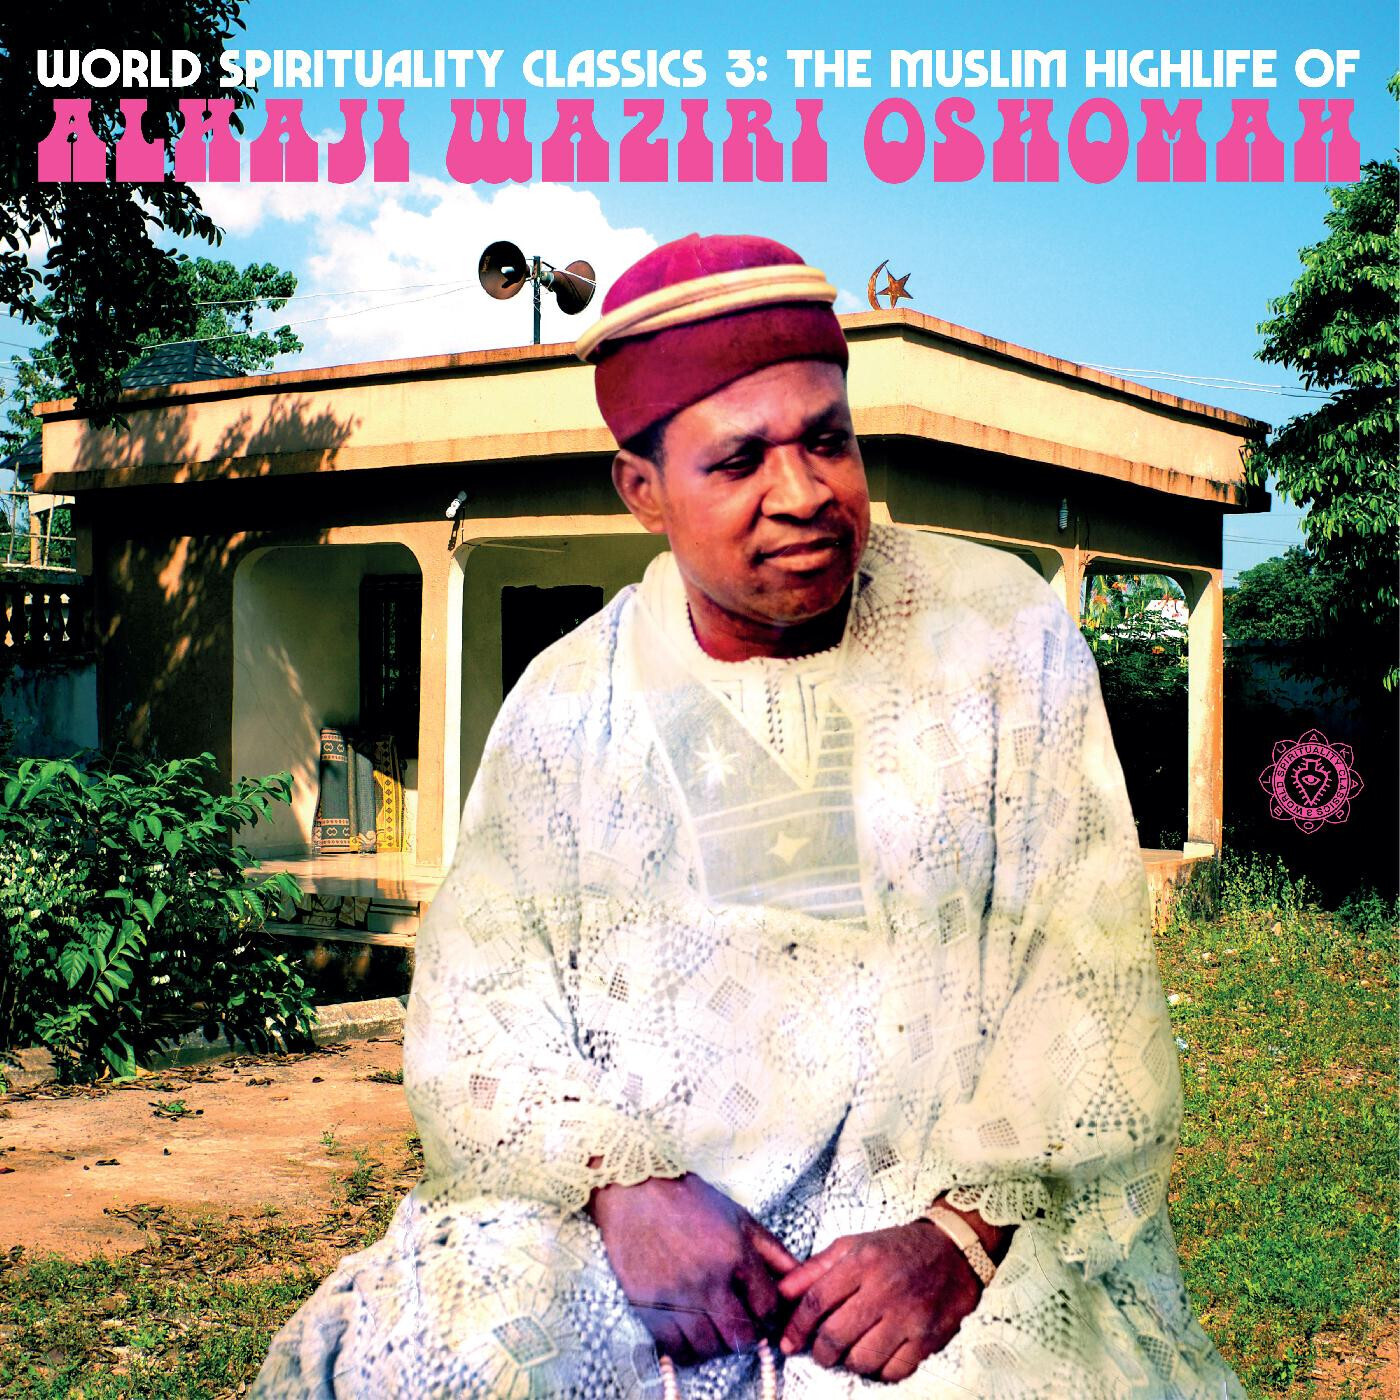 Alhaji Waziri Oshomah "World Spirituality Classics 3: The Muslim Highlife of Alhaji Waziri Oshomah"